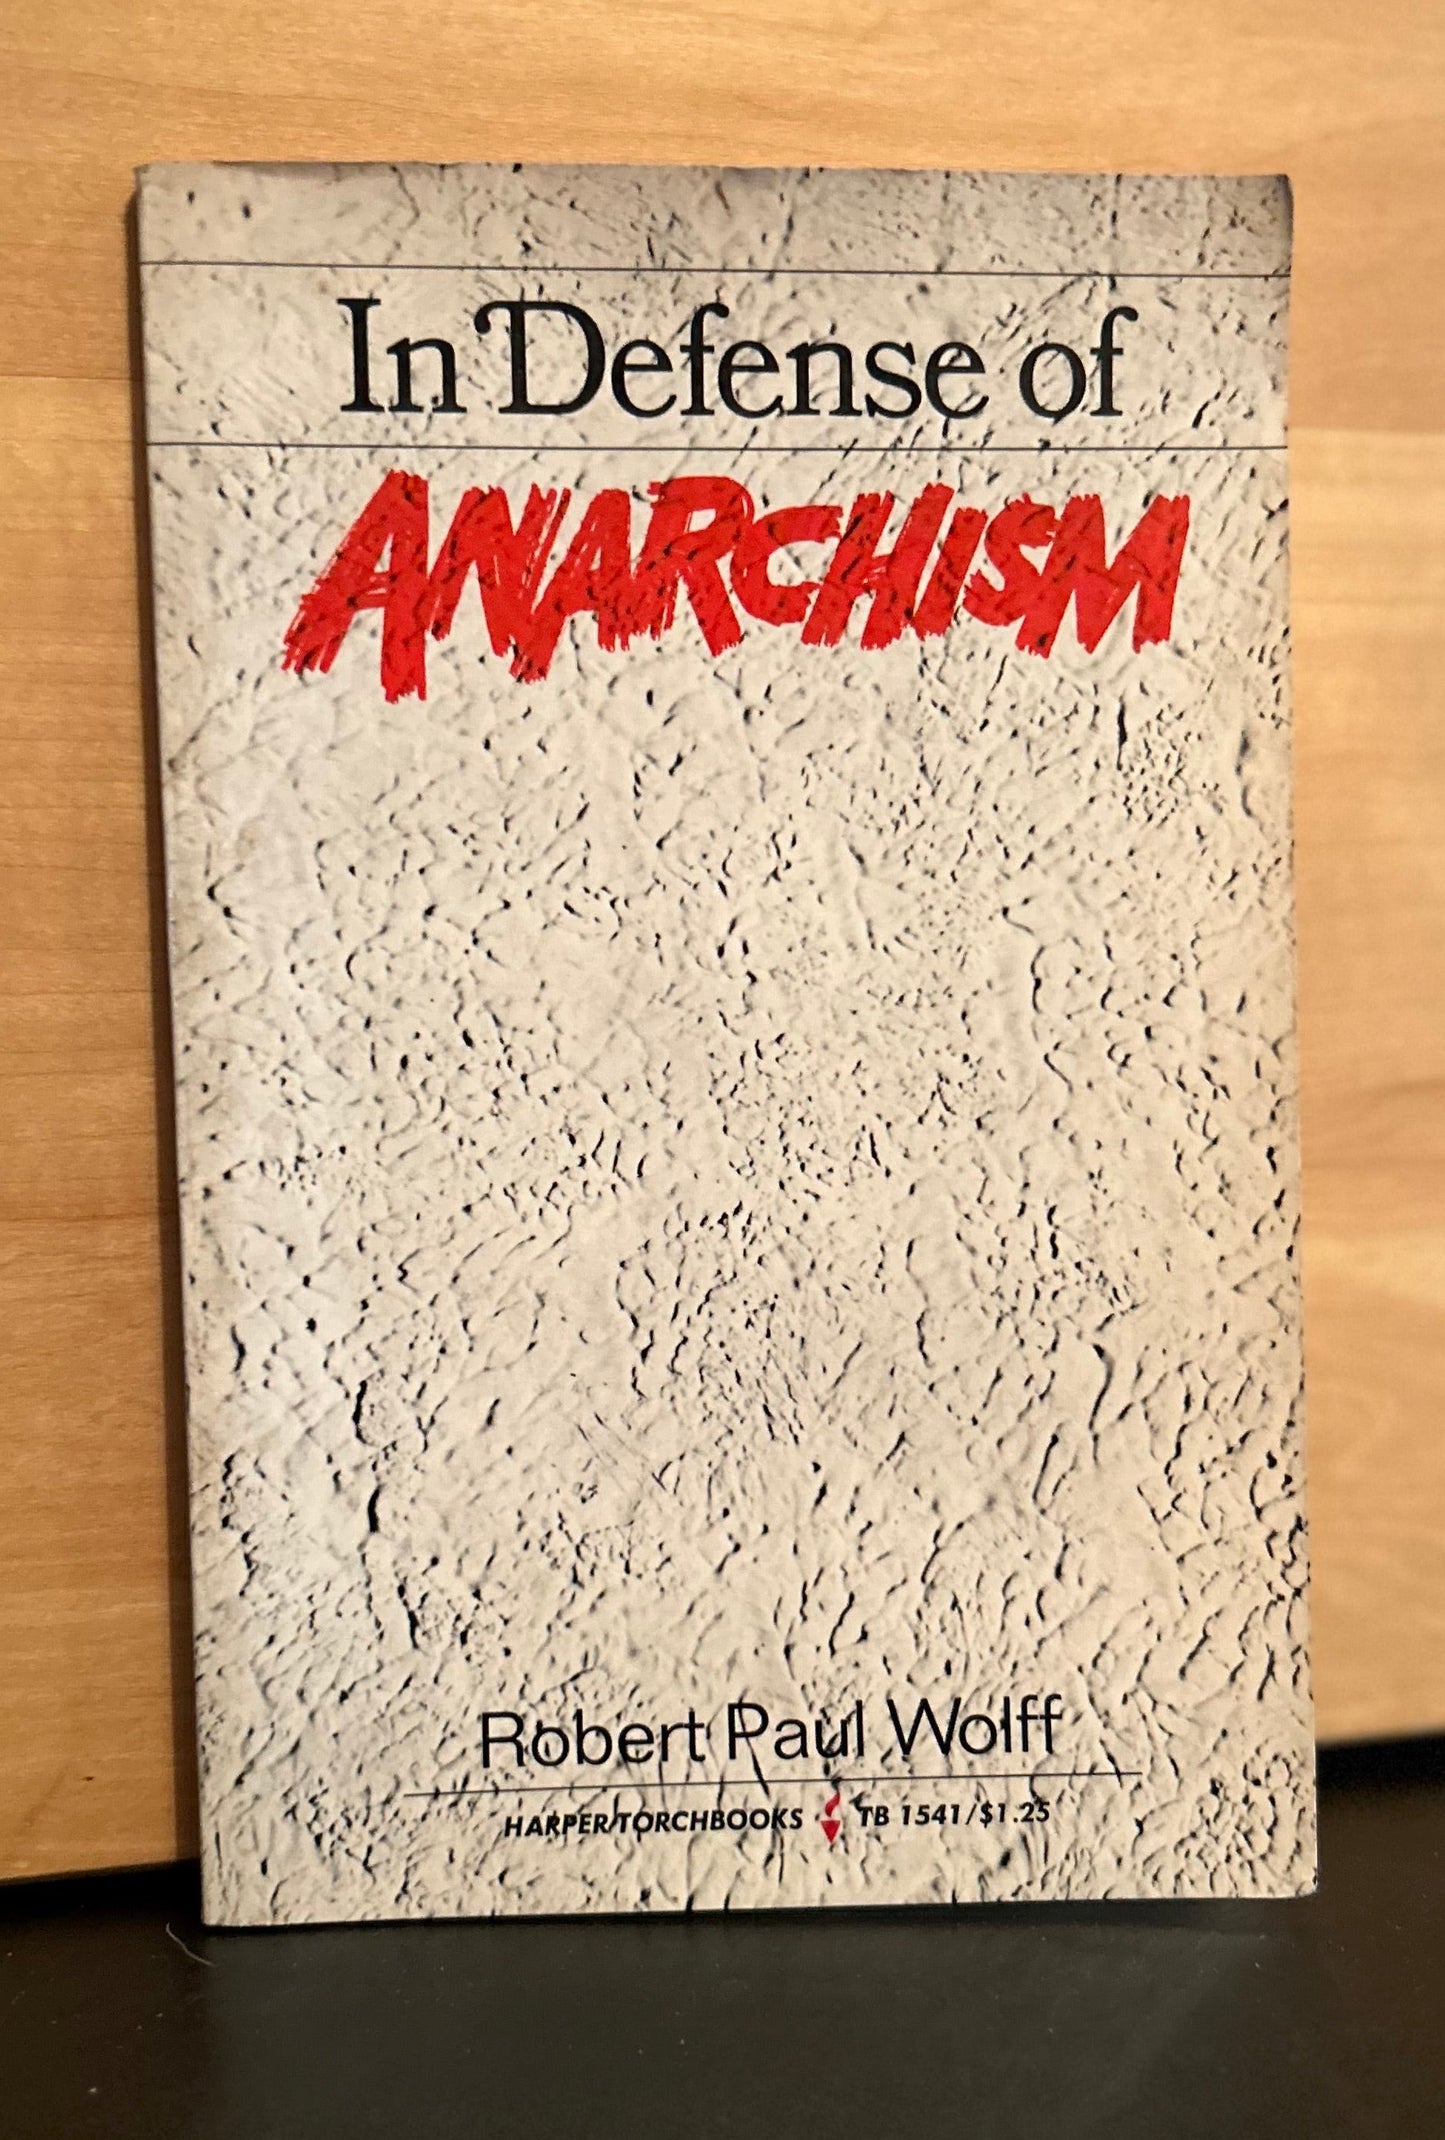 In Defense of Anarchism - Robert Paul Wolff